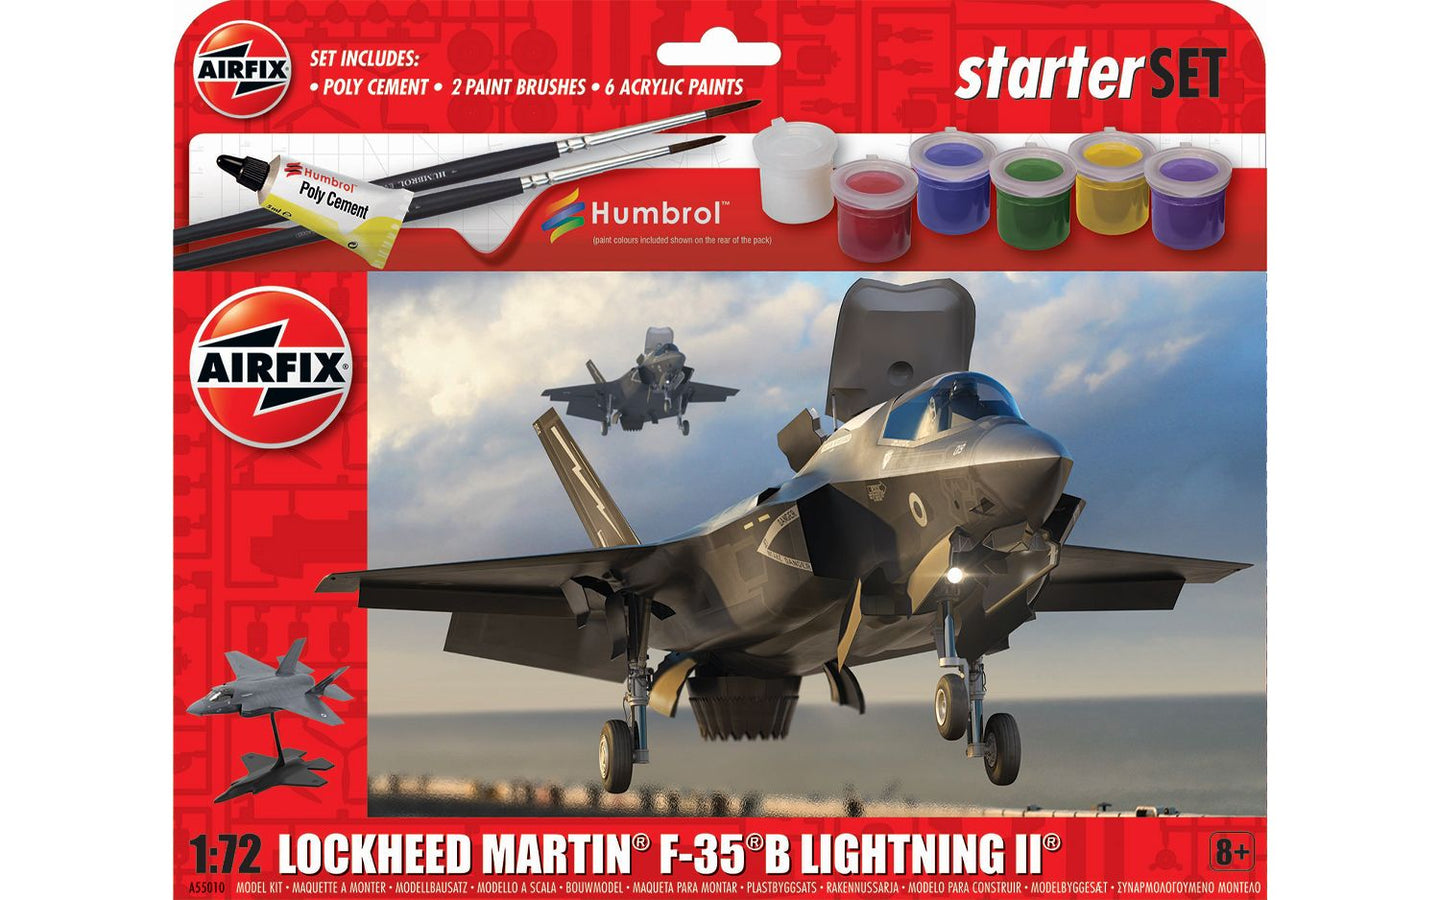 Airfix Starter Set 1/72 Lockheed Martin F-35B Lightning II 55010